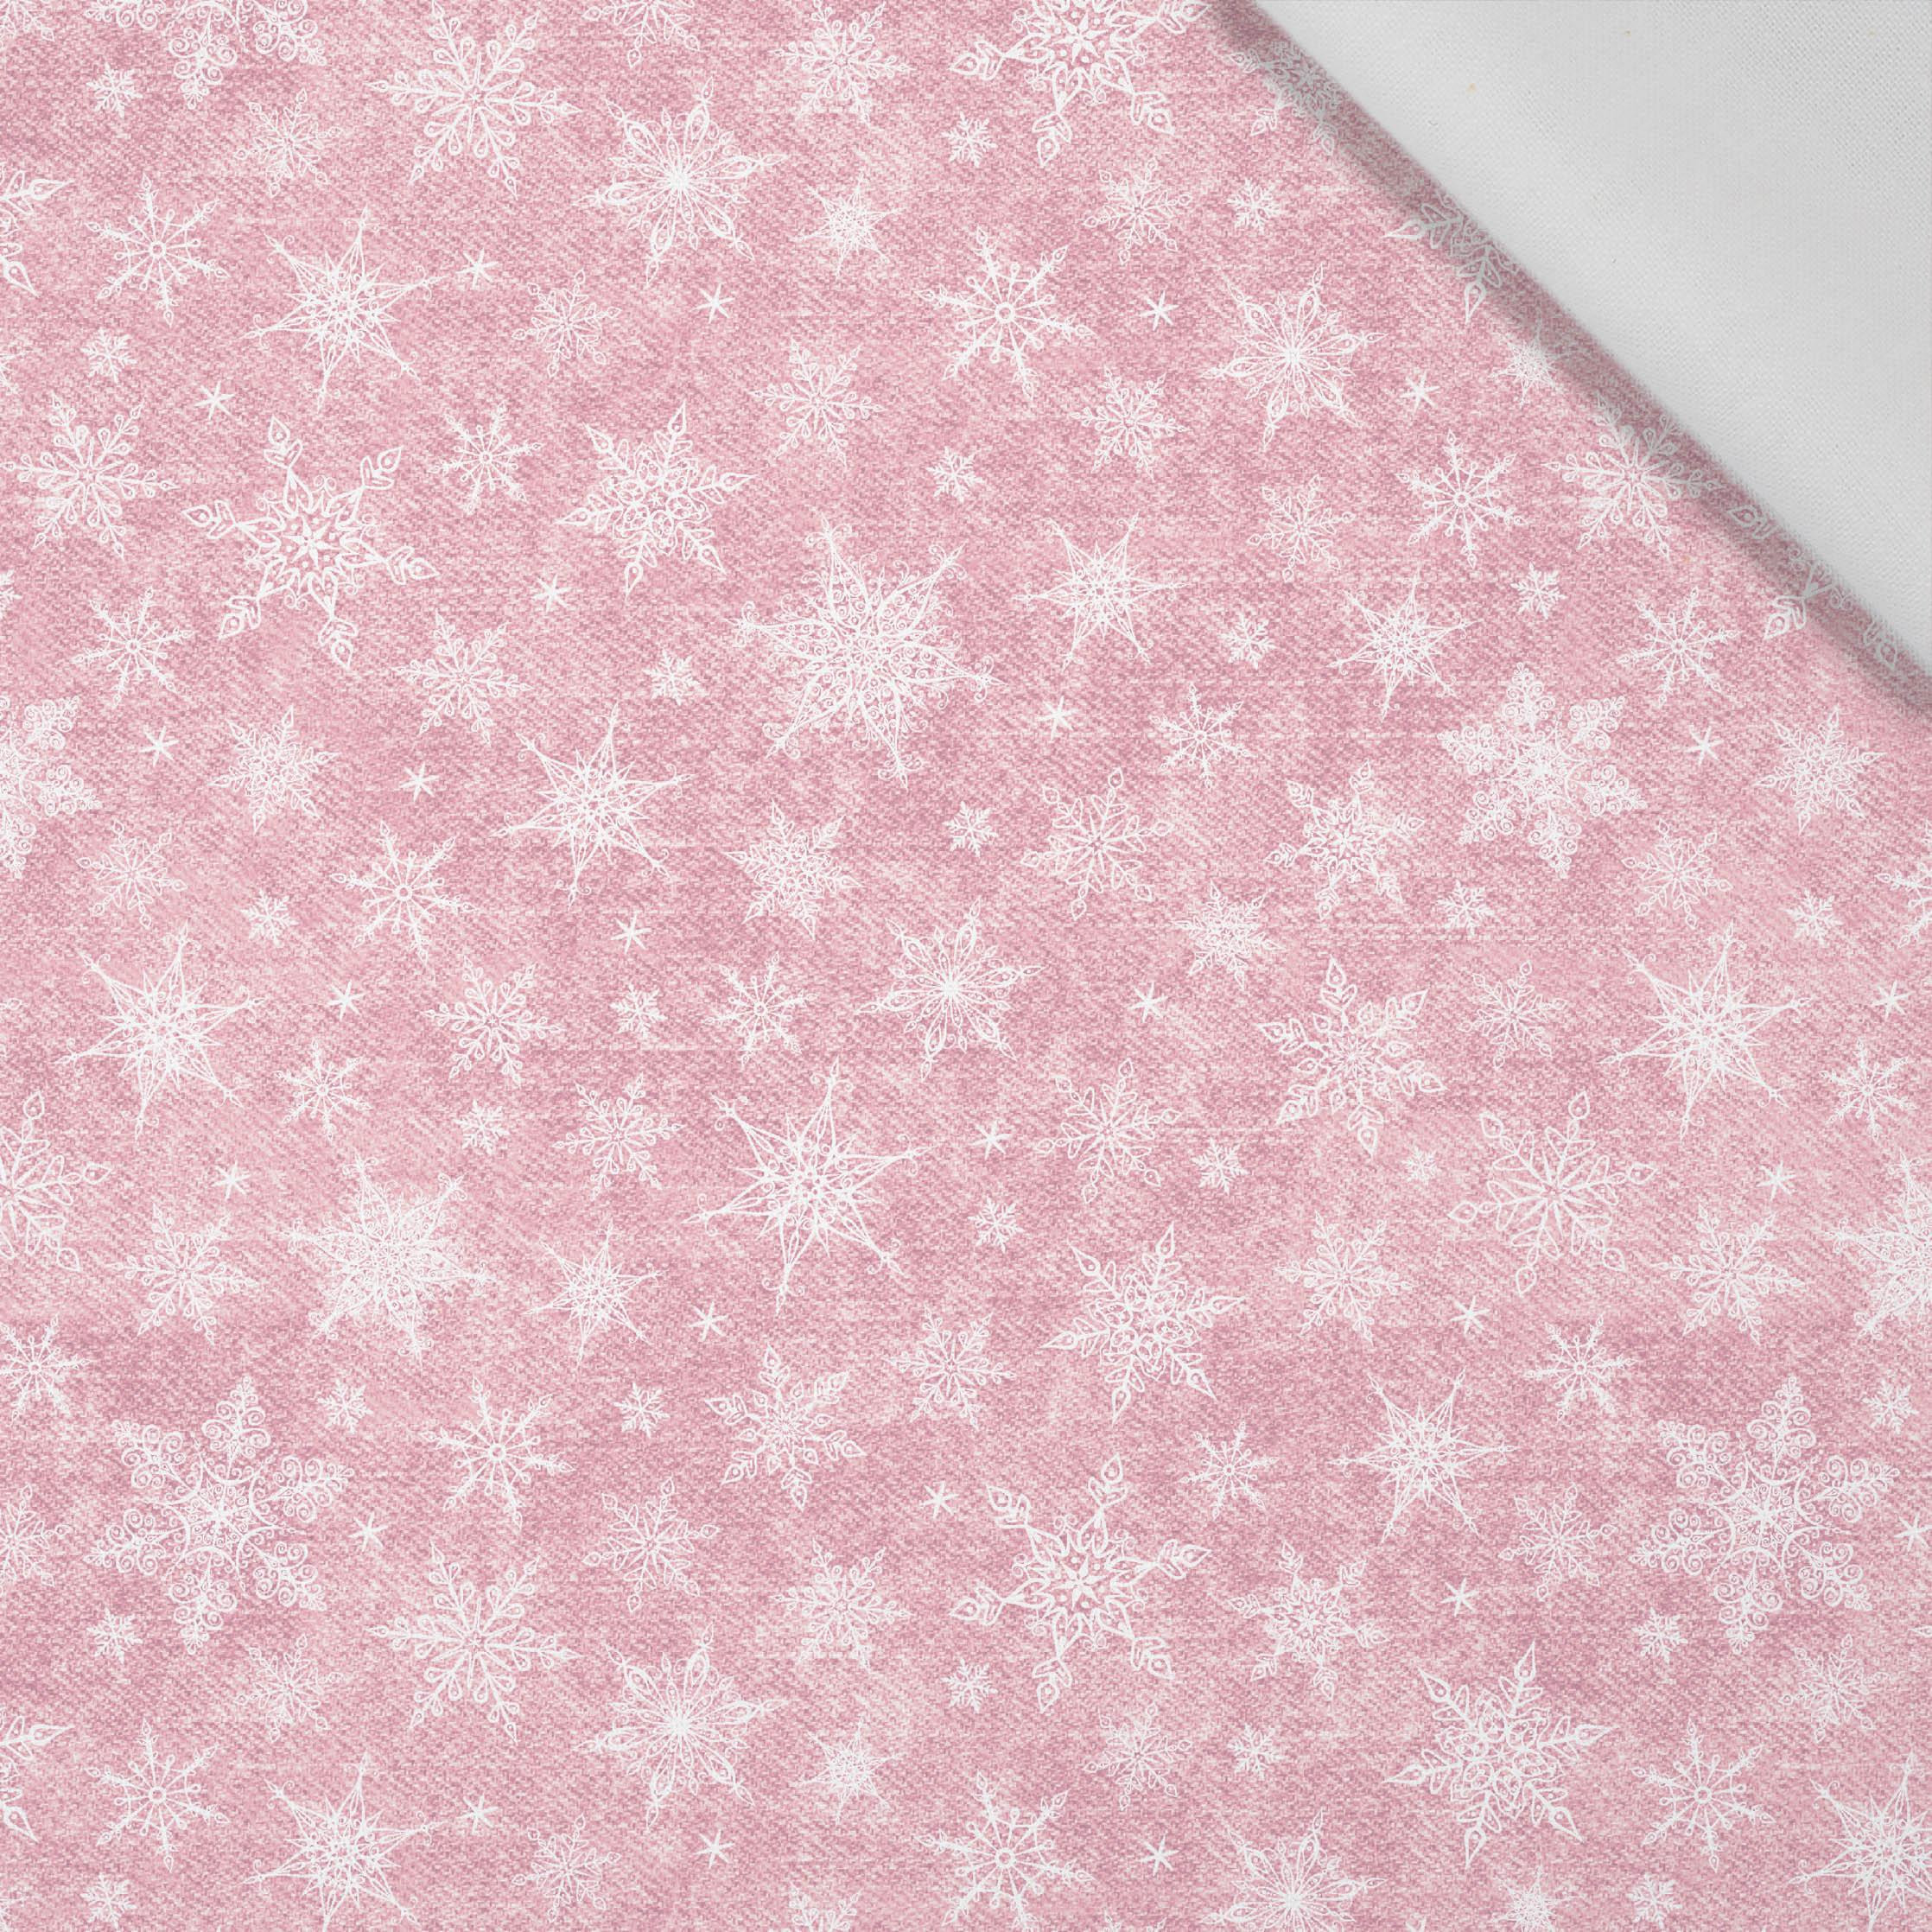 SNOWFLAKES PAT. 2 / ACID WASH ROSE QUARTZ - Cotton woven fabric